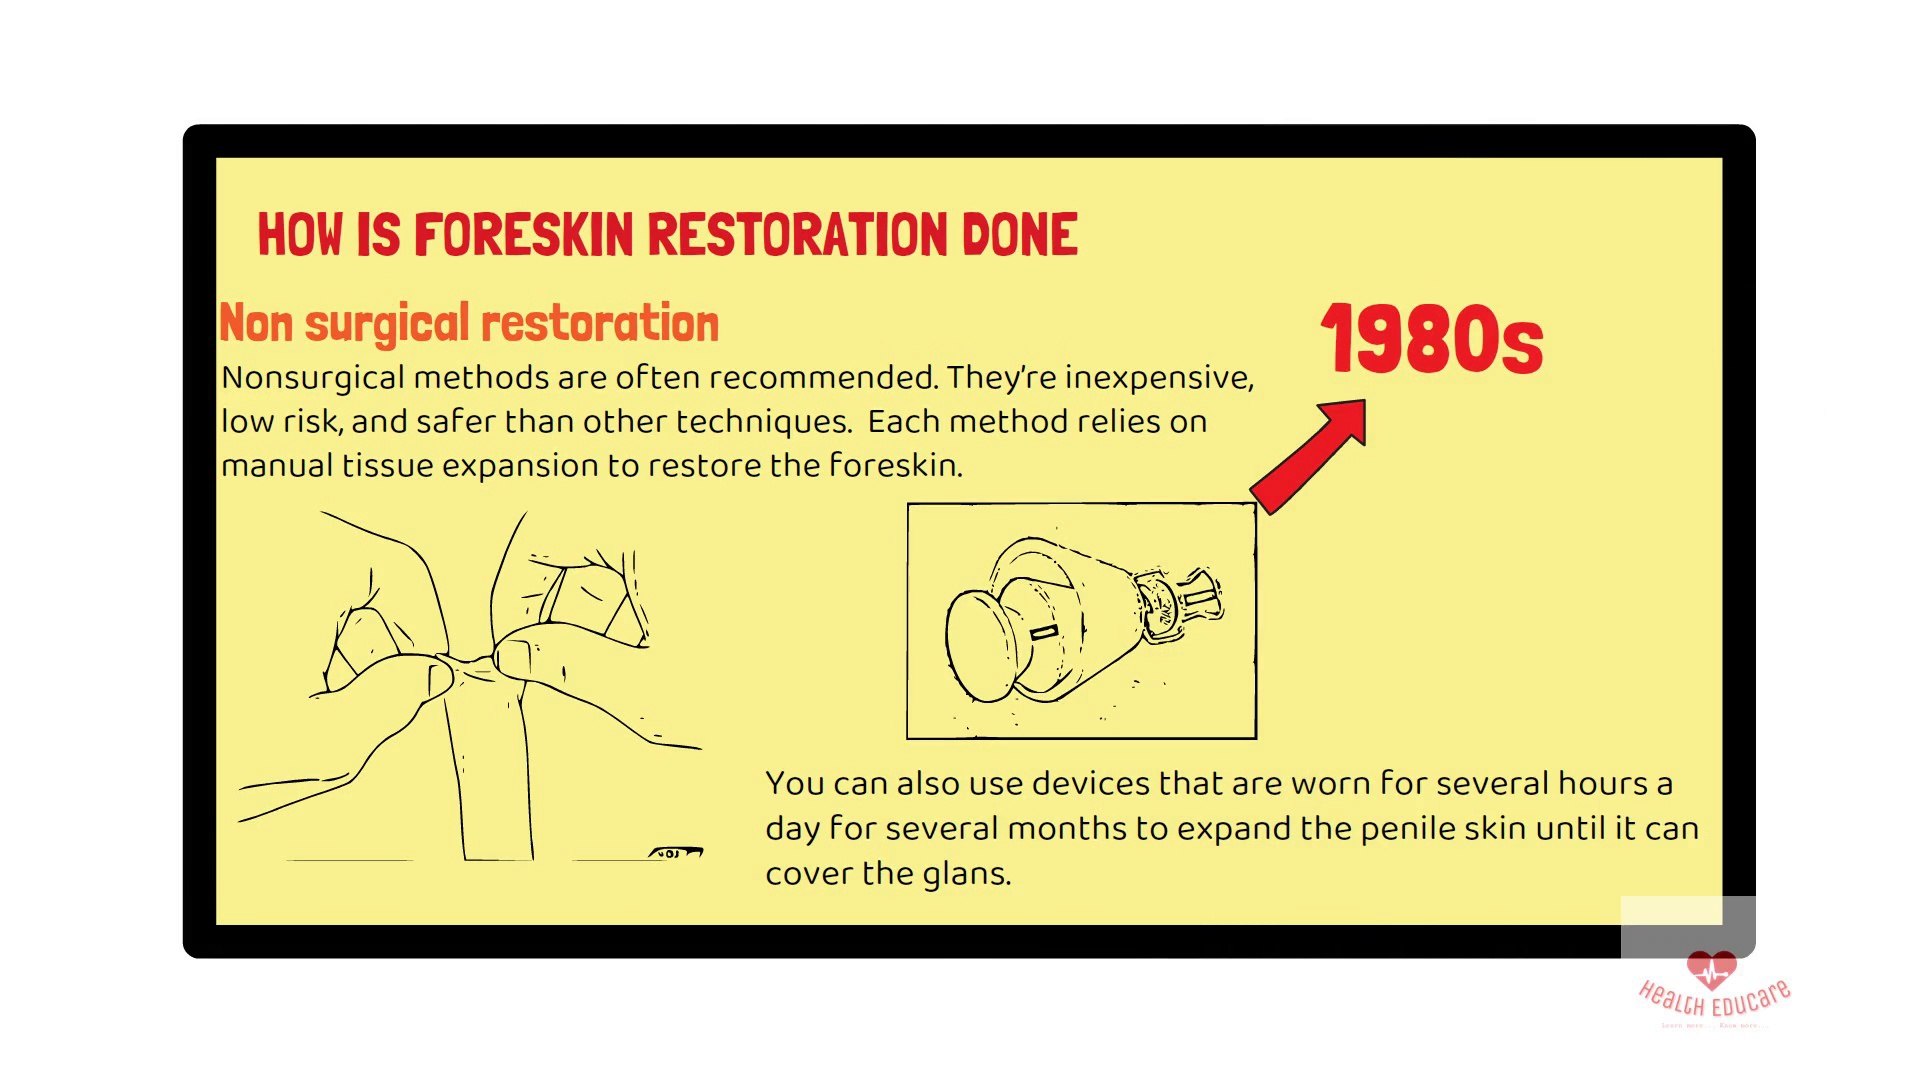 abdul moiz qureshi add photo pictures of foreskin restoration